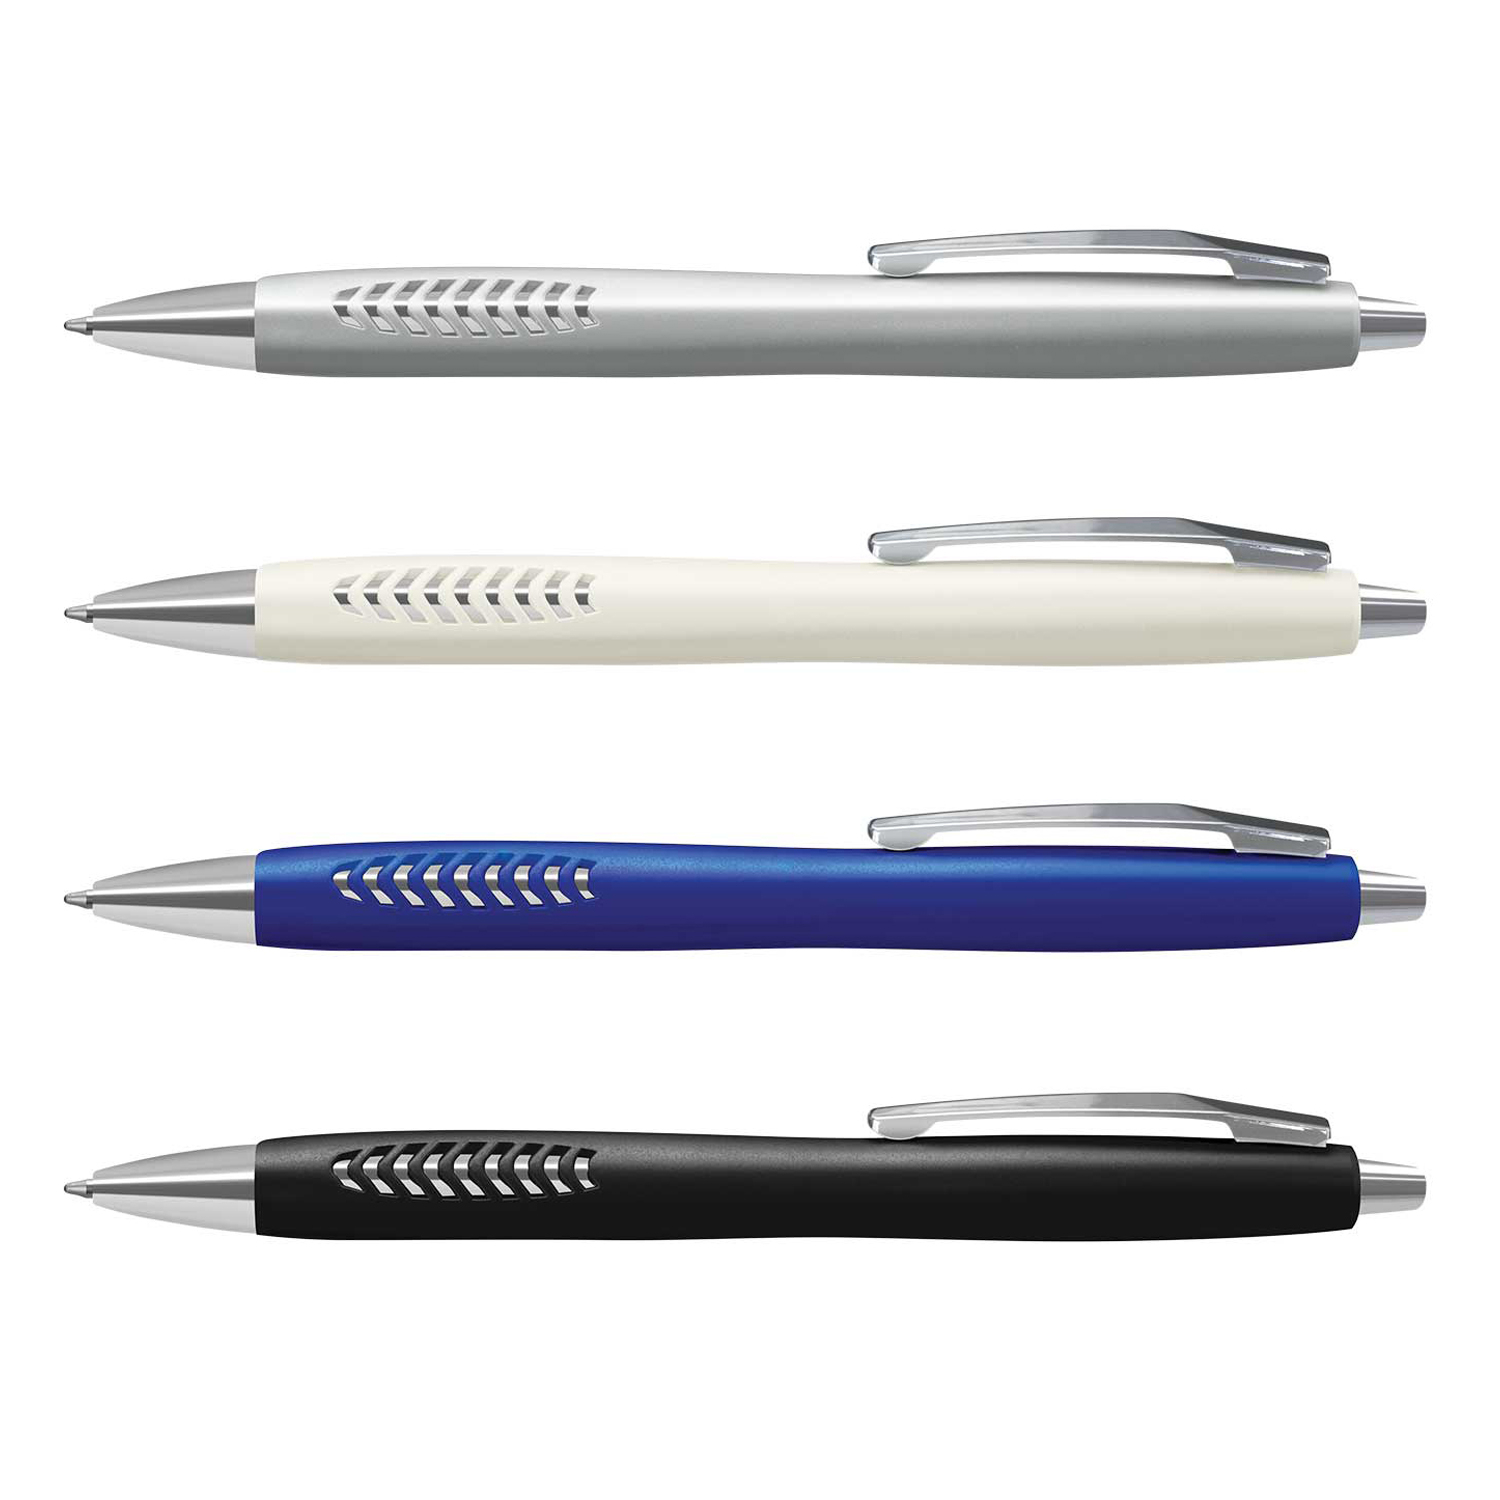 Plastic Topaz Pen pen